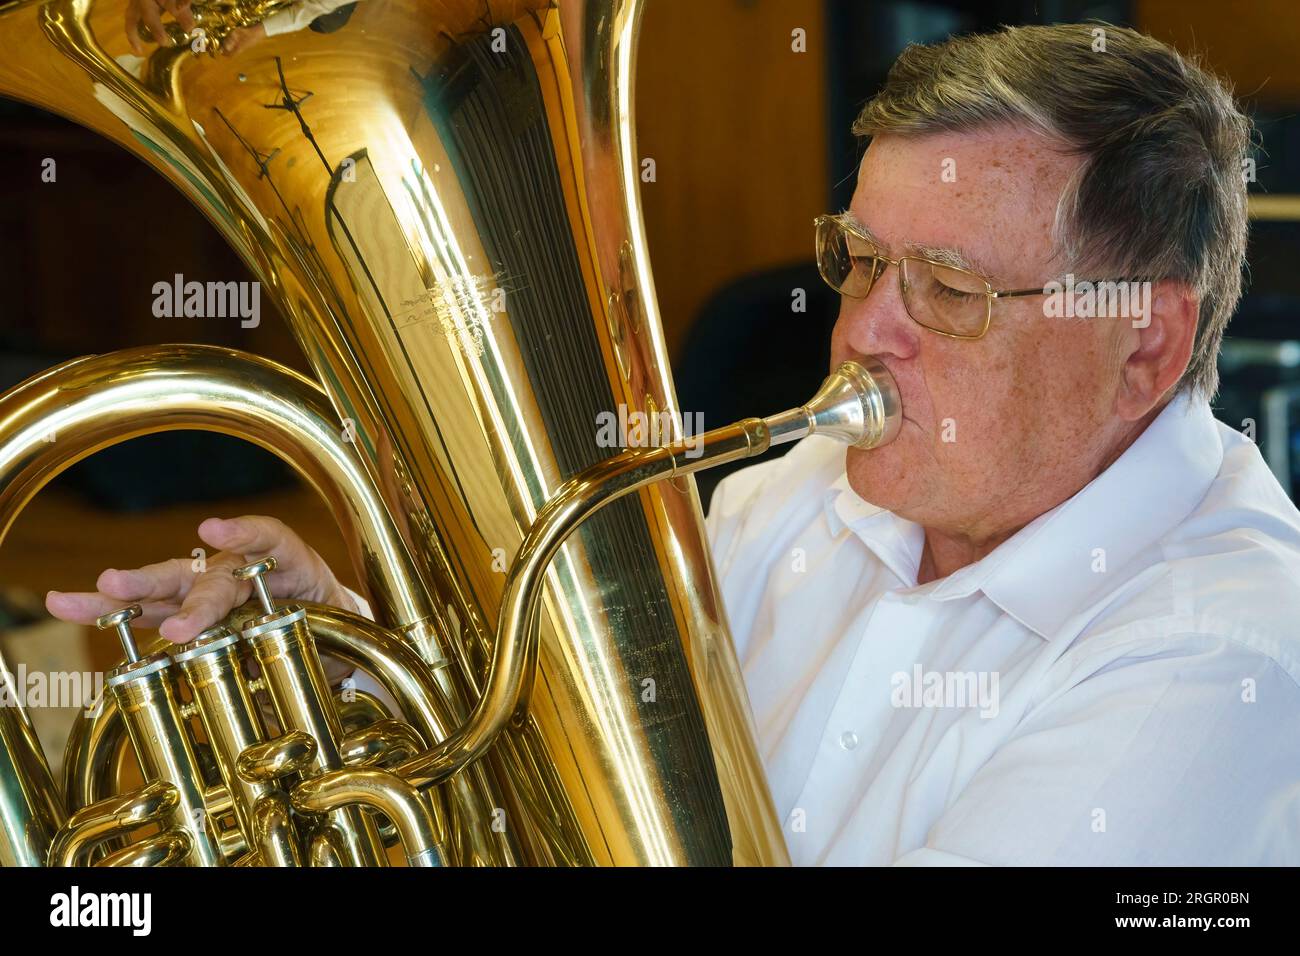 Musiker spielt die tuba Stockfoto